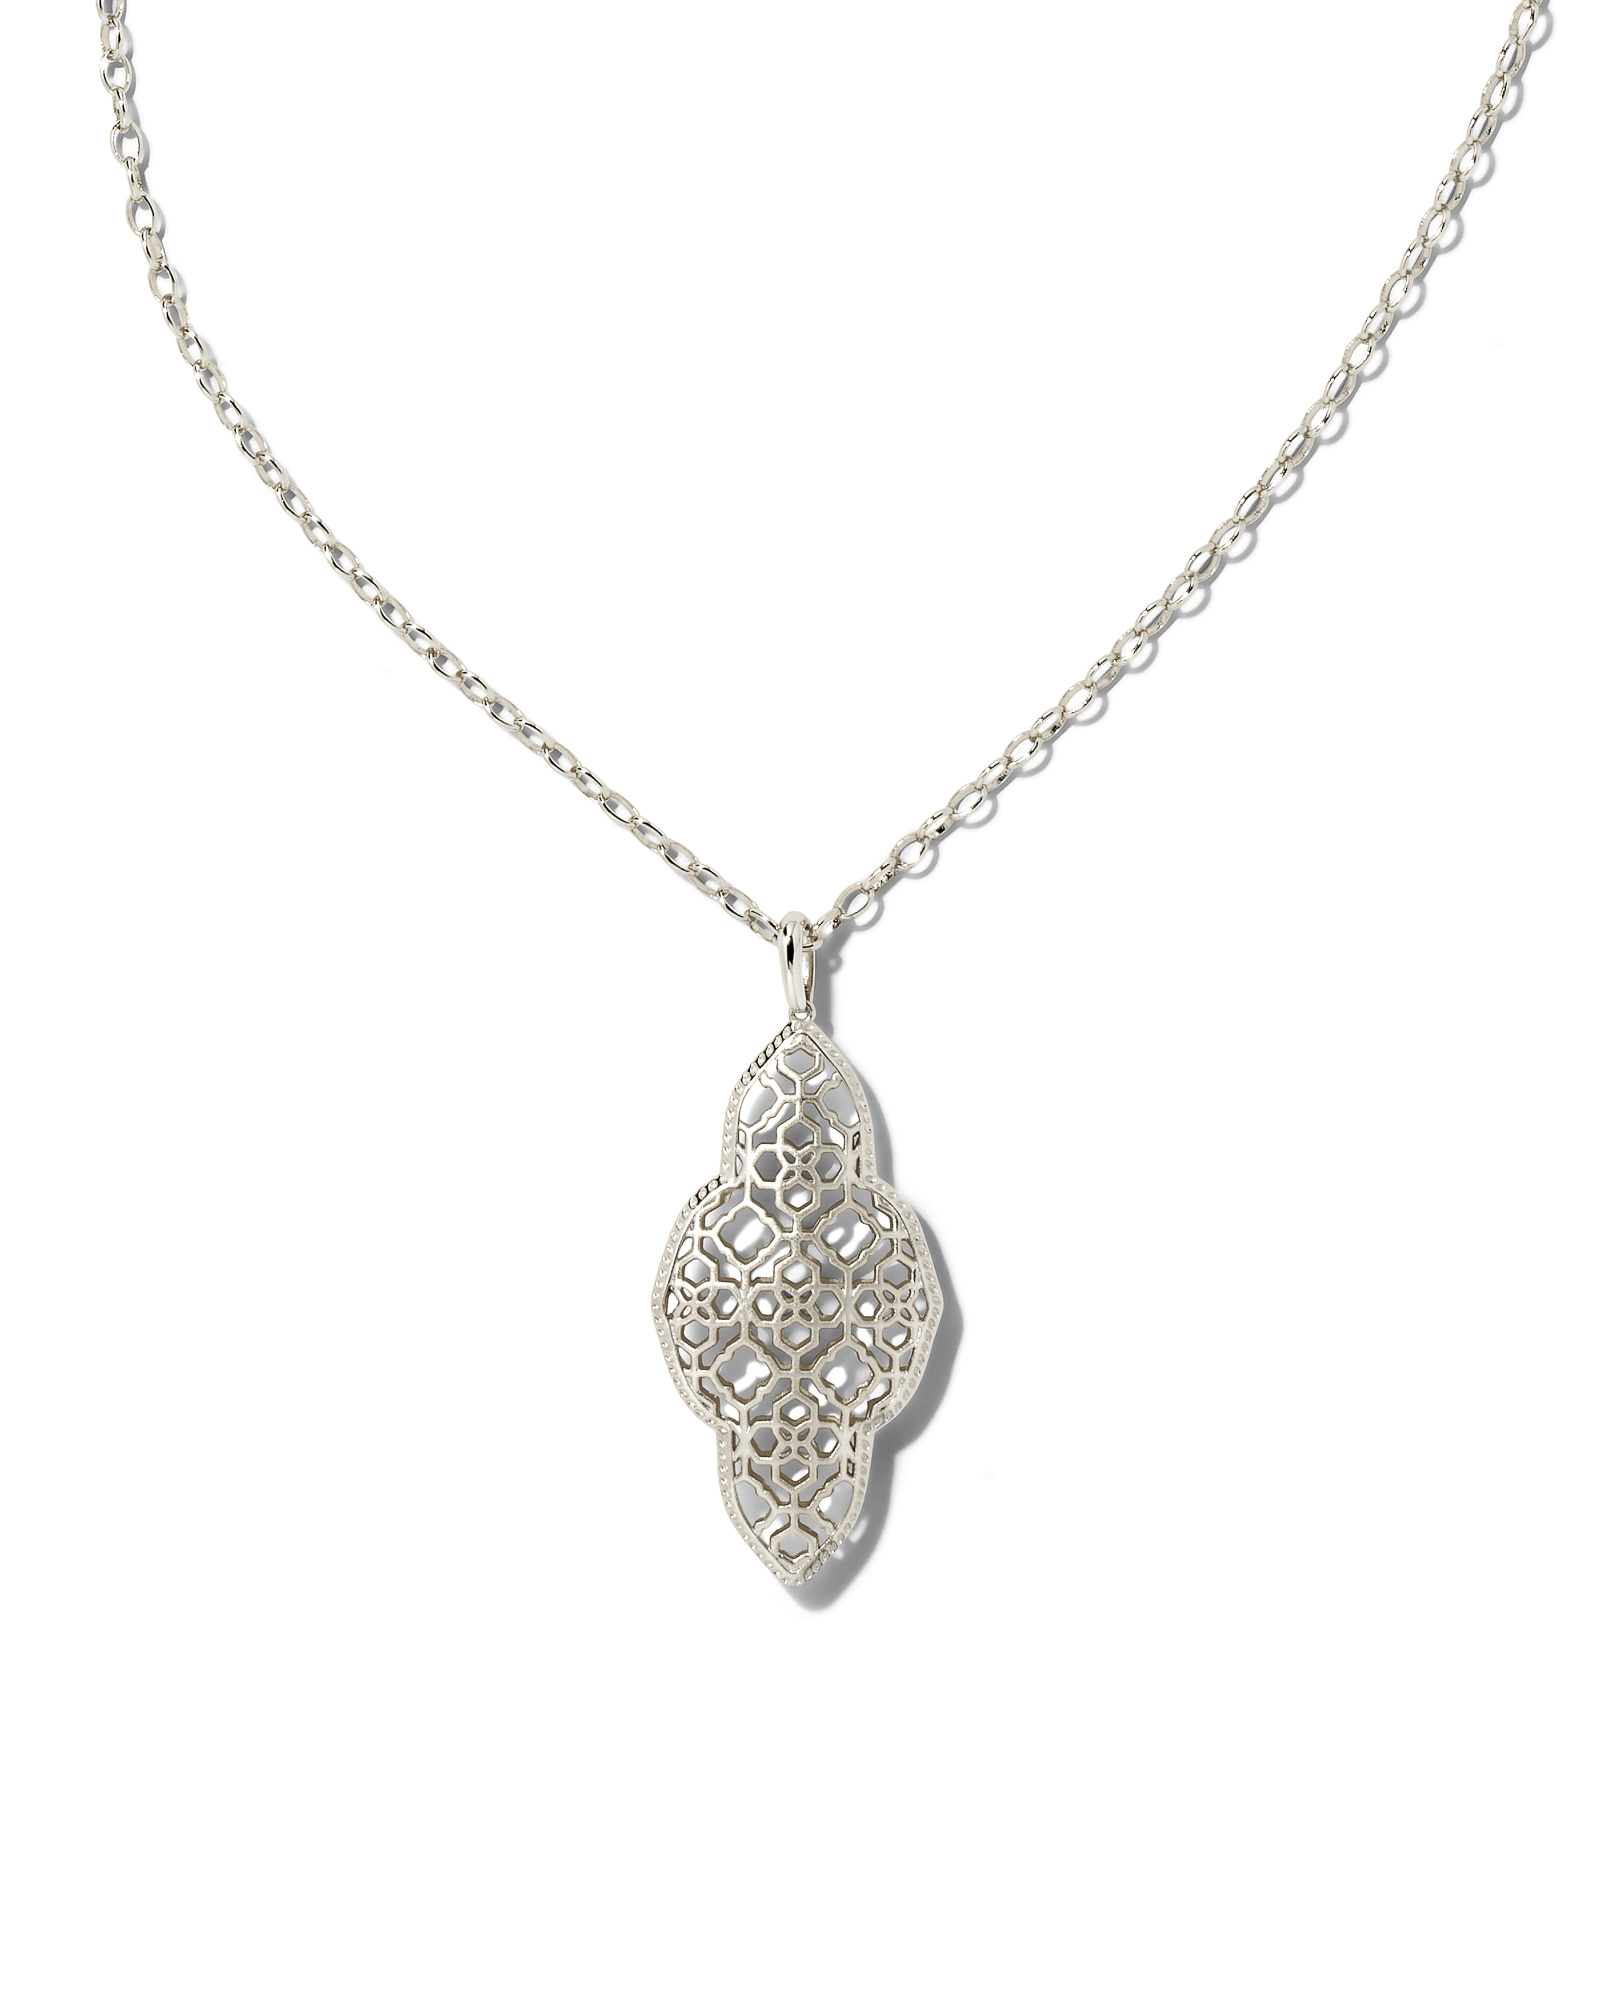 Abbie Long Pendant Necklace in Silver | Kendra Scott